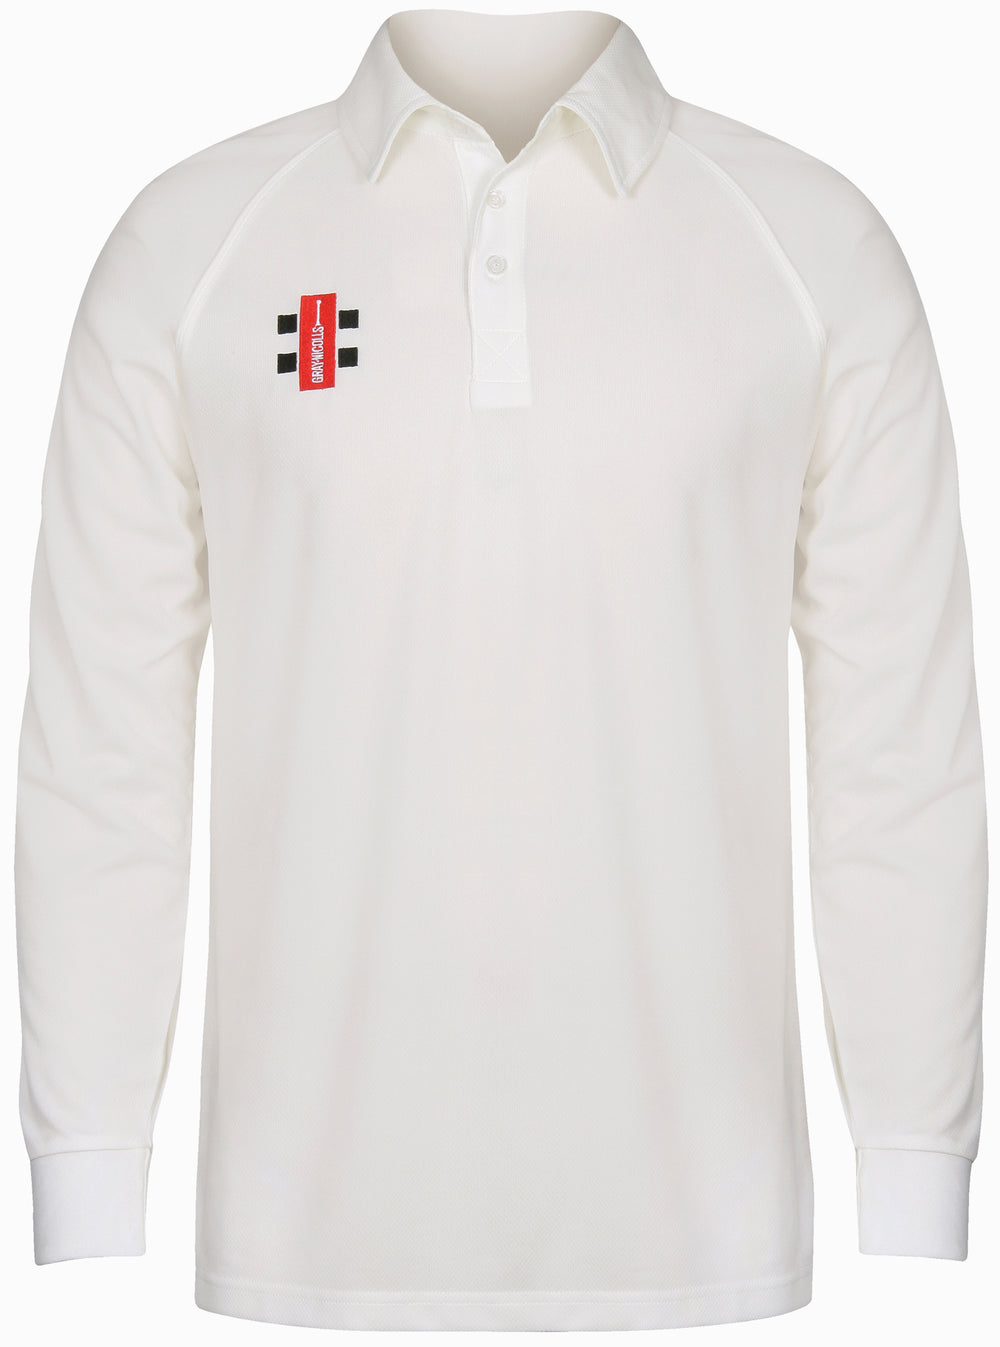 Upton St Leonards CC Matrix Long Sleeve Match Shirt